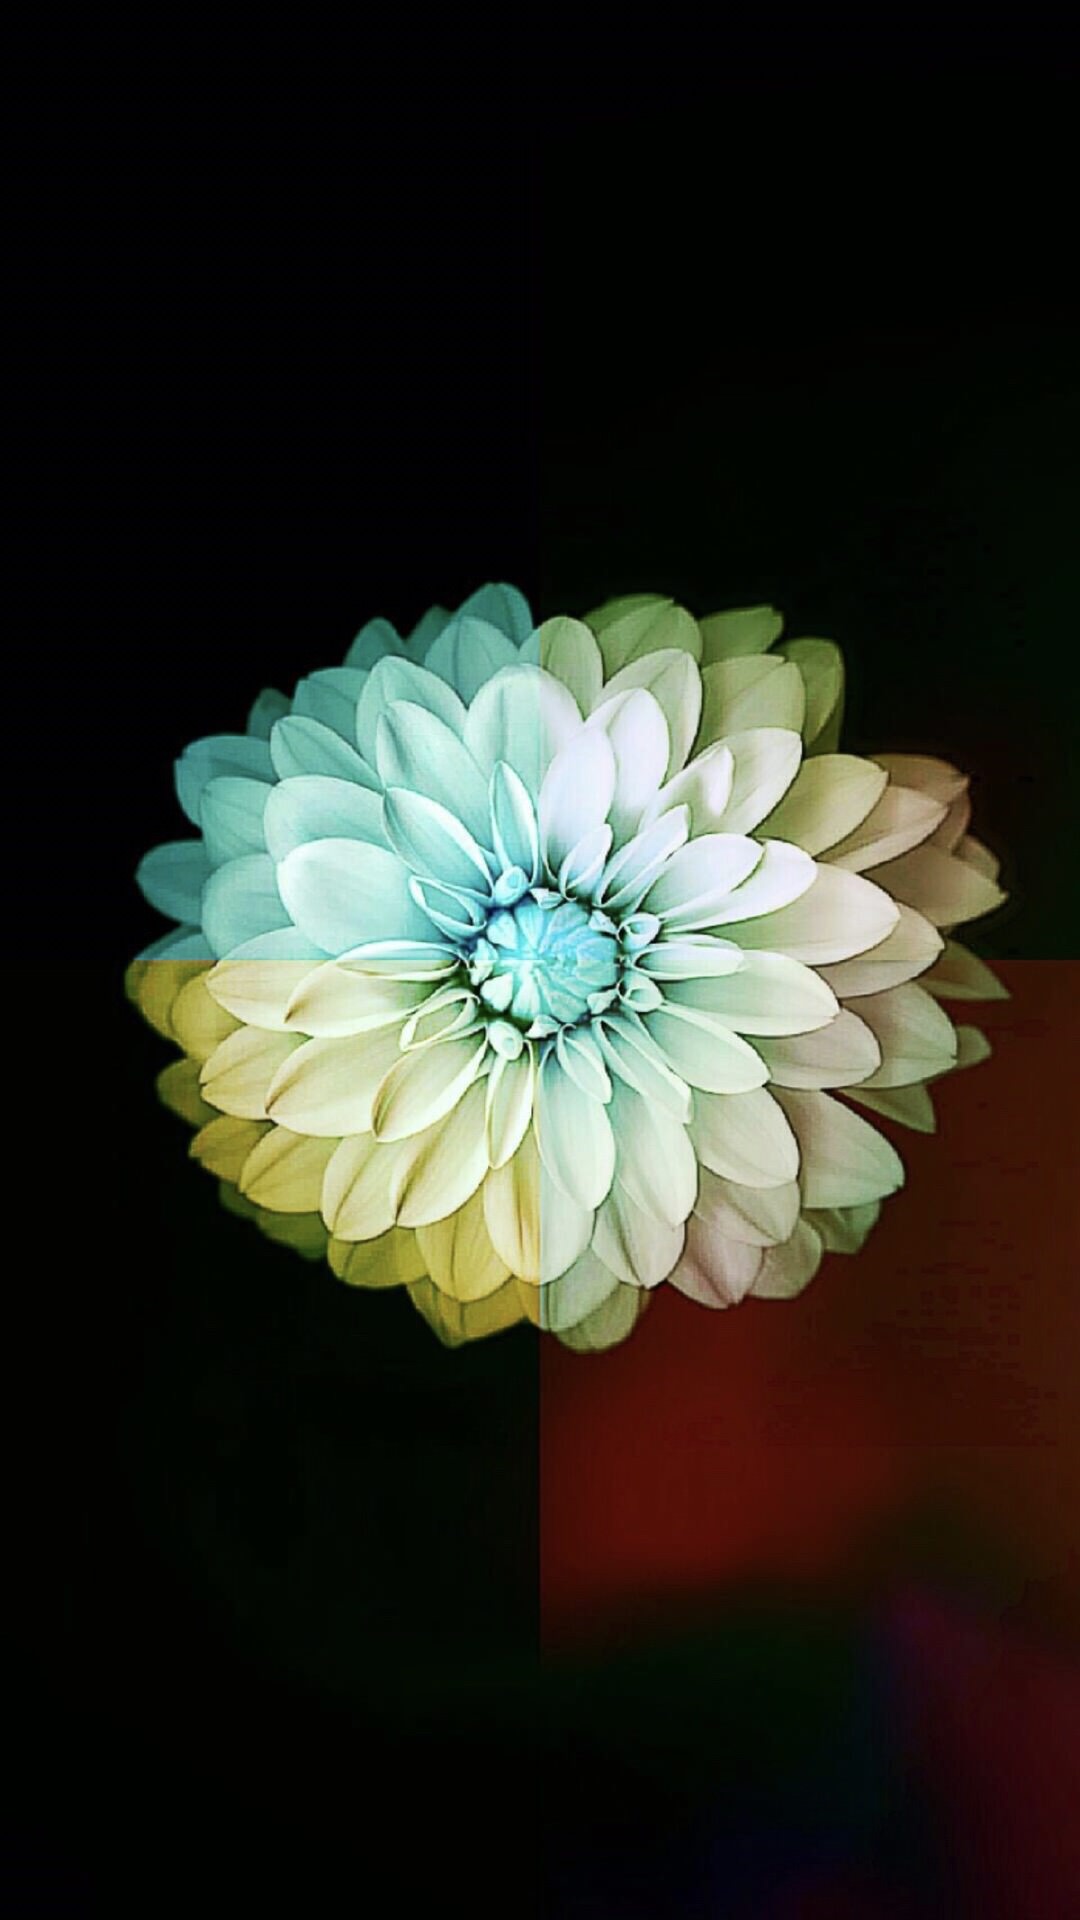 Flower Cool | wallpaper.sc iPhone6sPlus